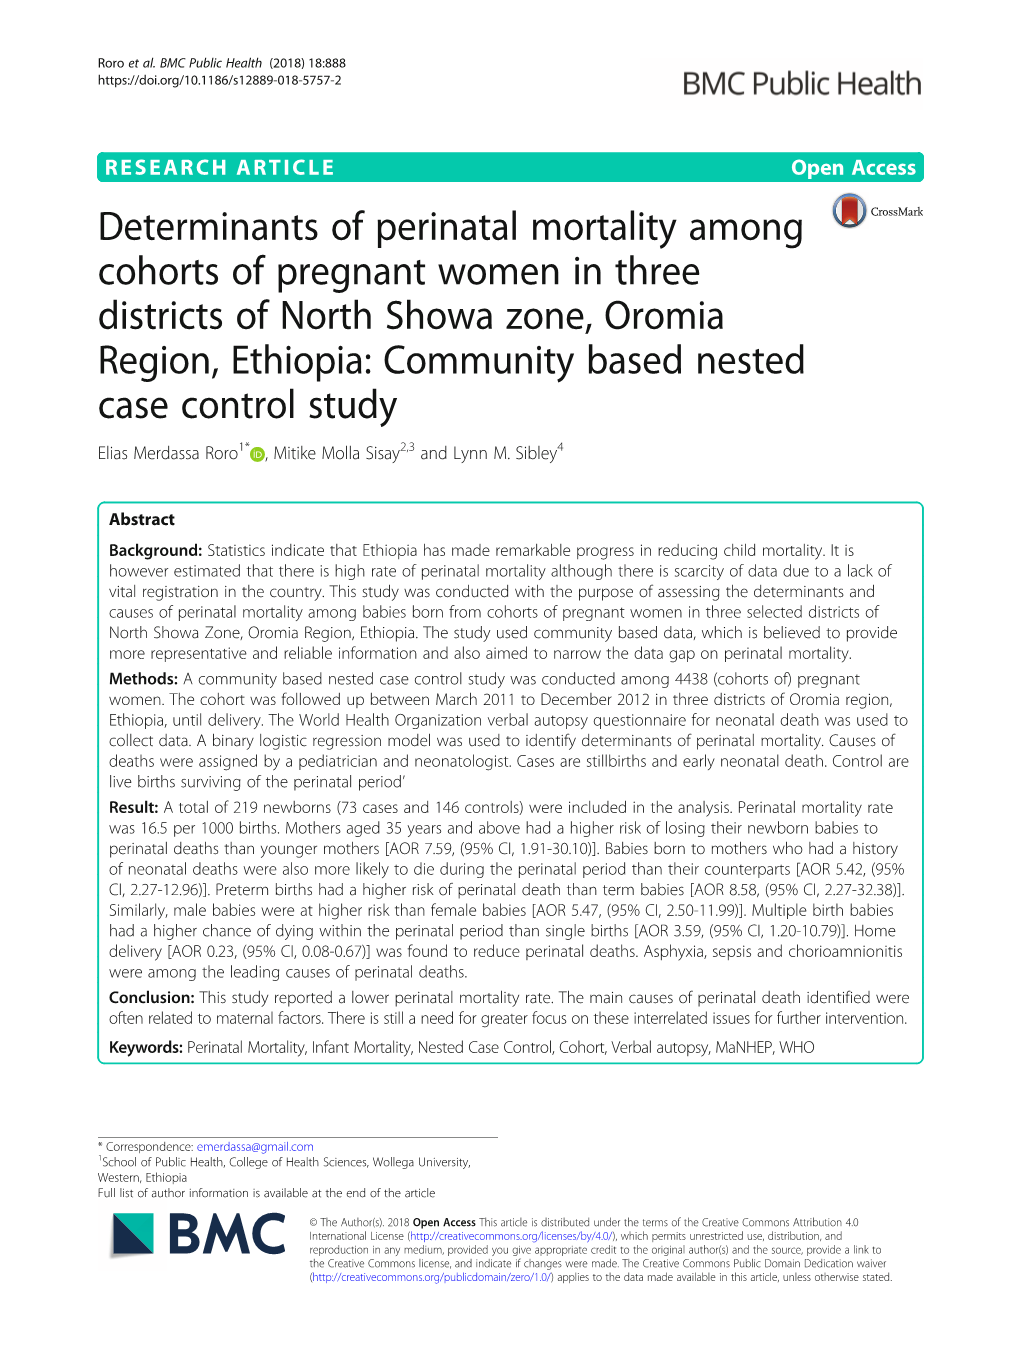 Determinants of Perinatal Mortality Among Cohorts of Pregnant Women